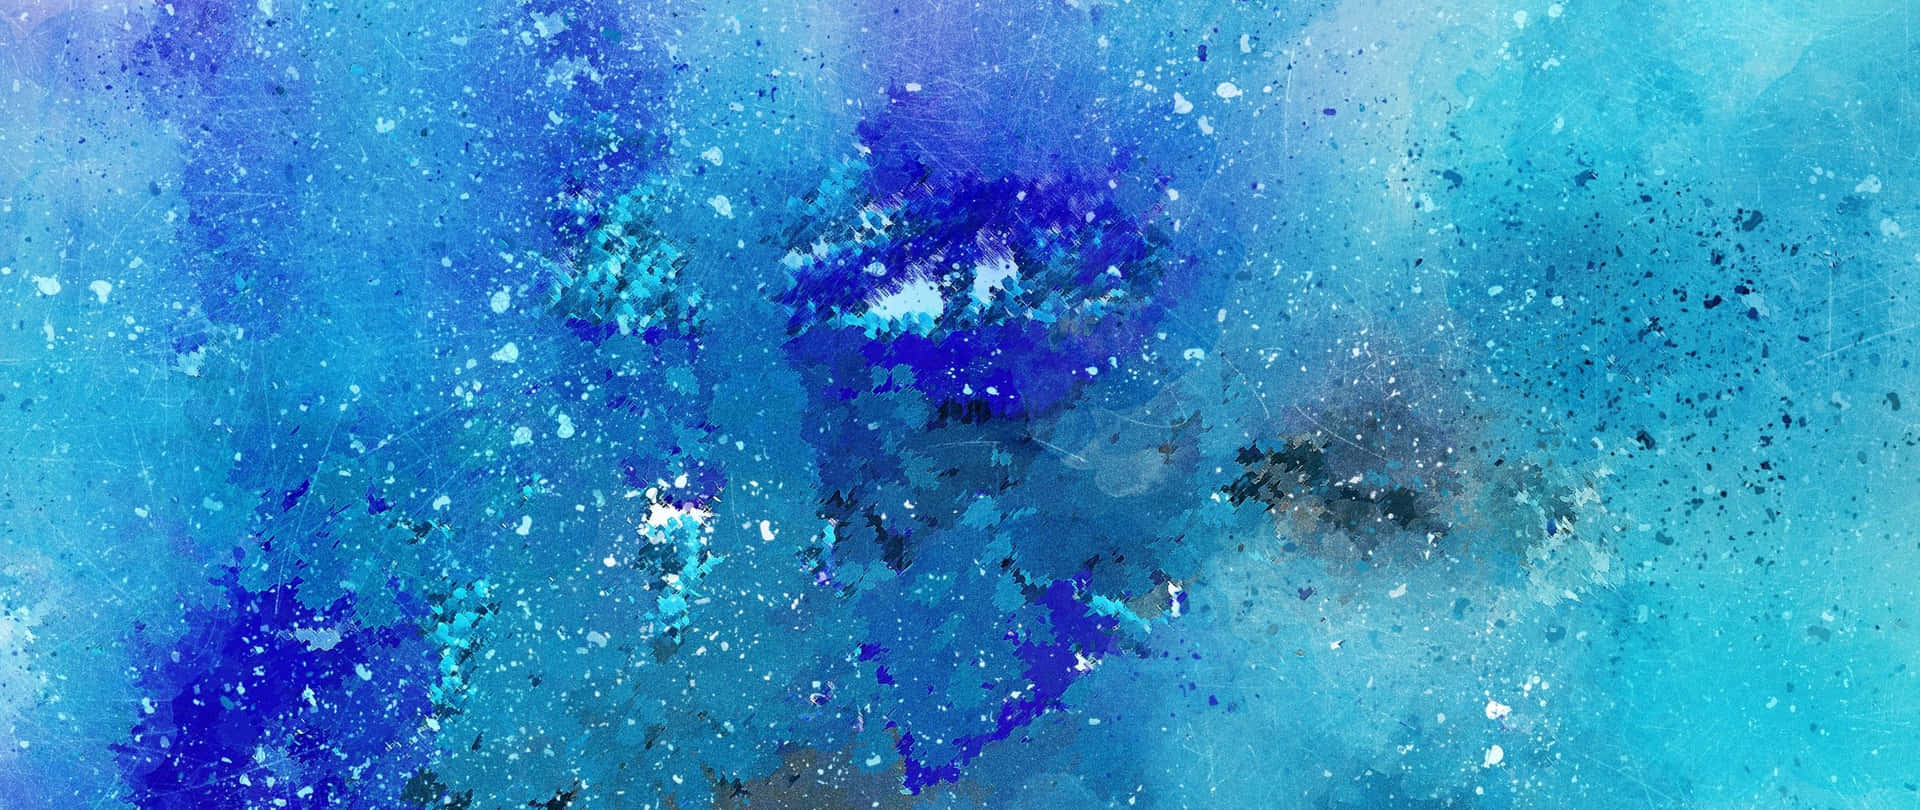 Paint Splashes Blue Watercolor Background